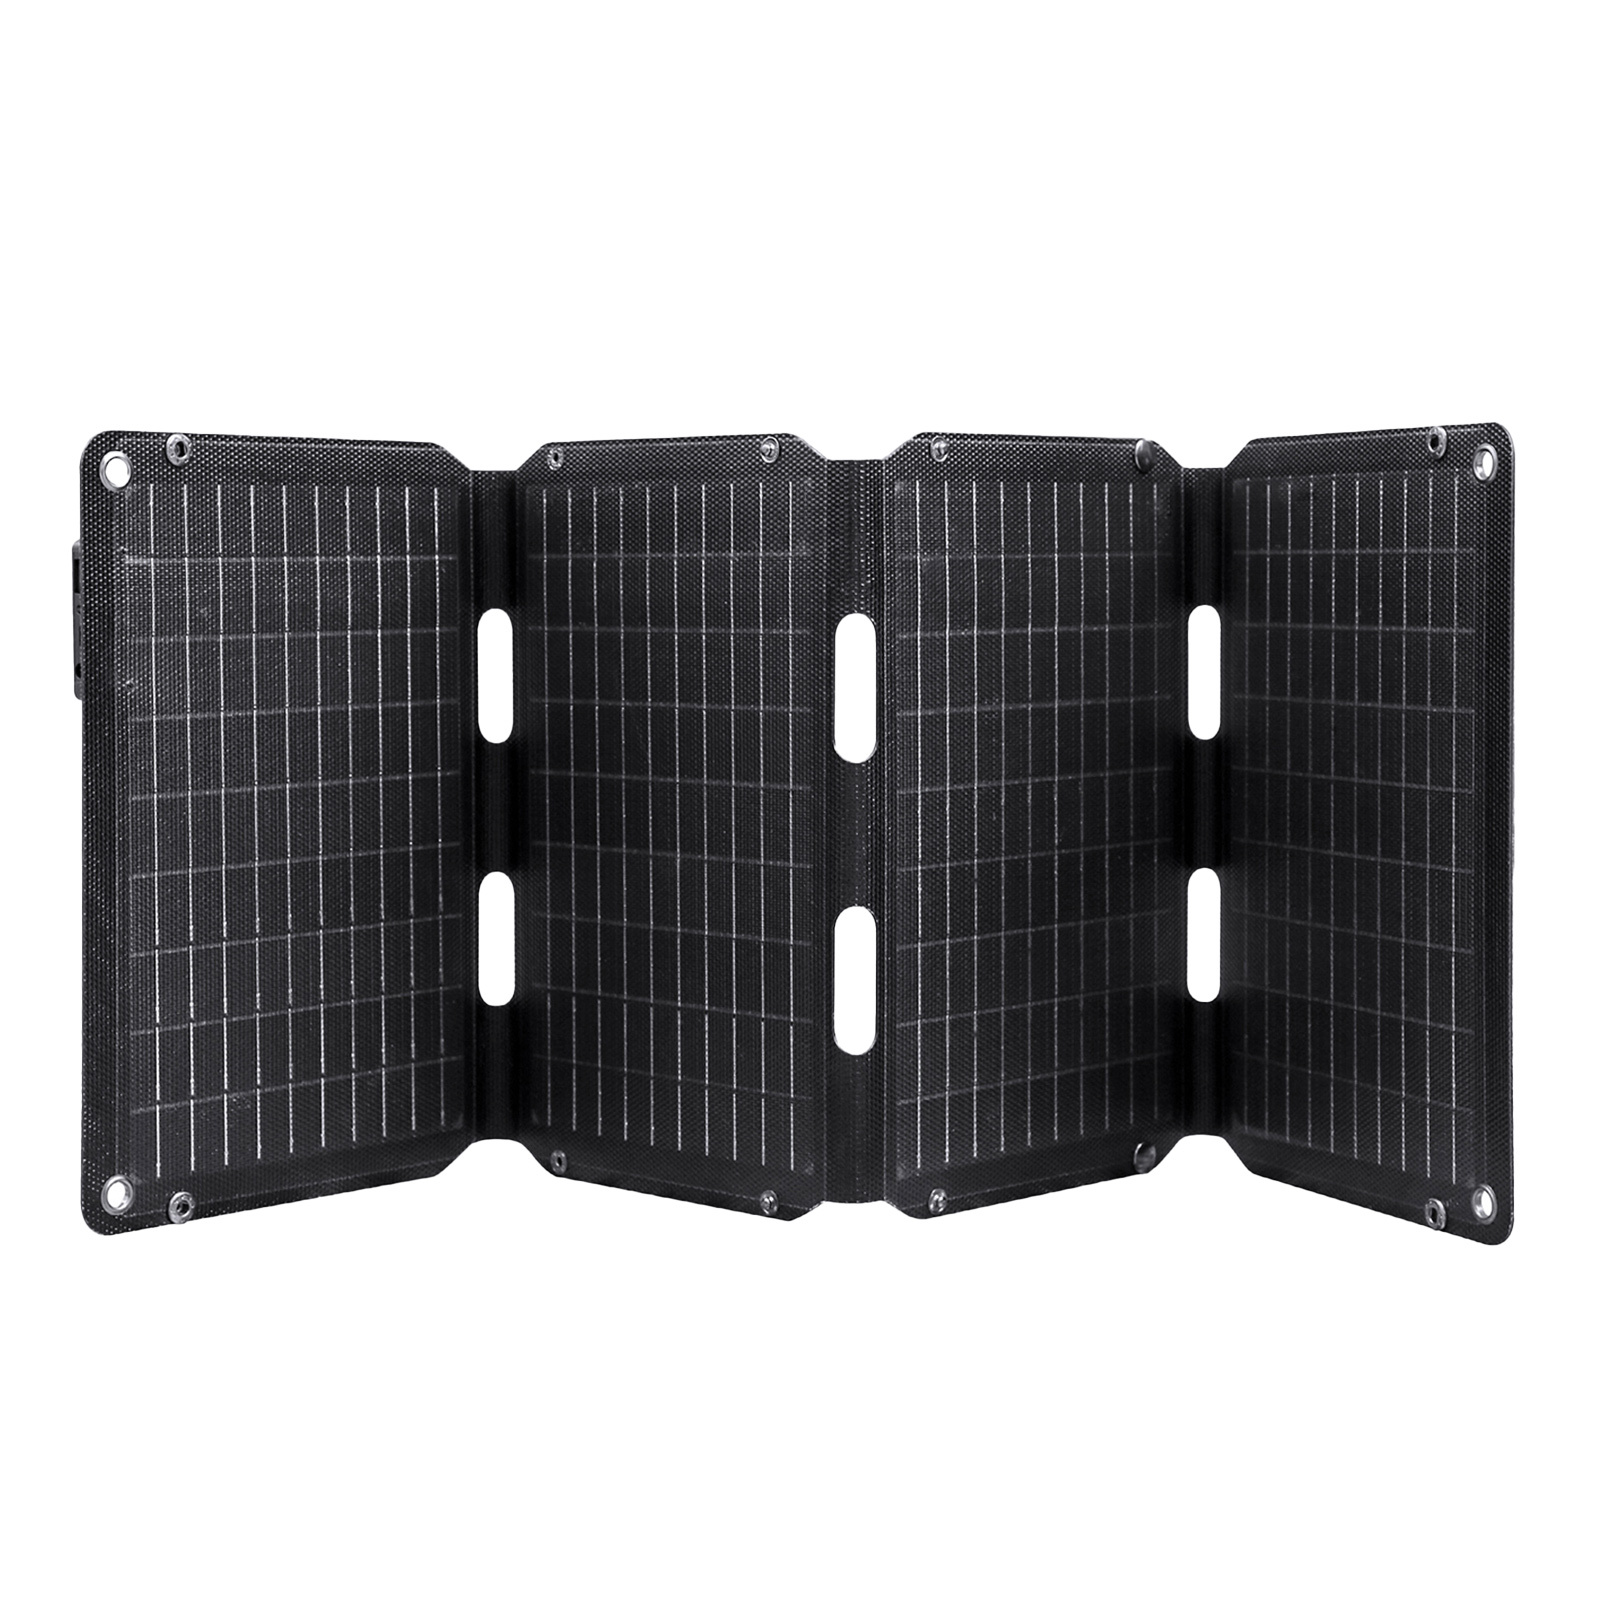 JumpsPower 60W Portable Solar Panel